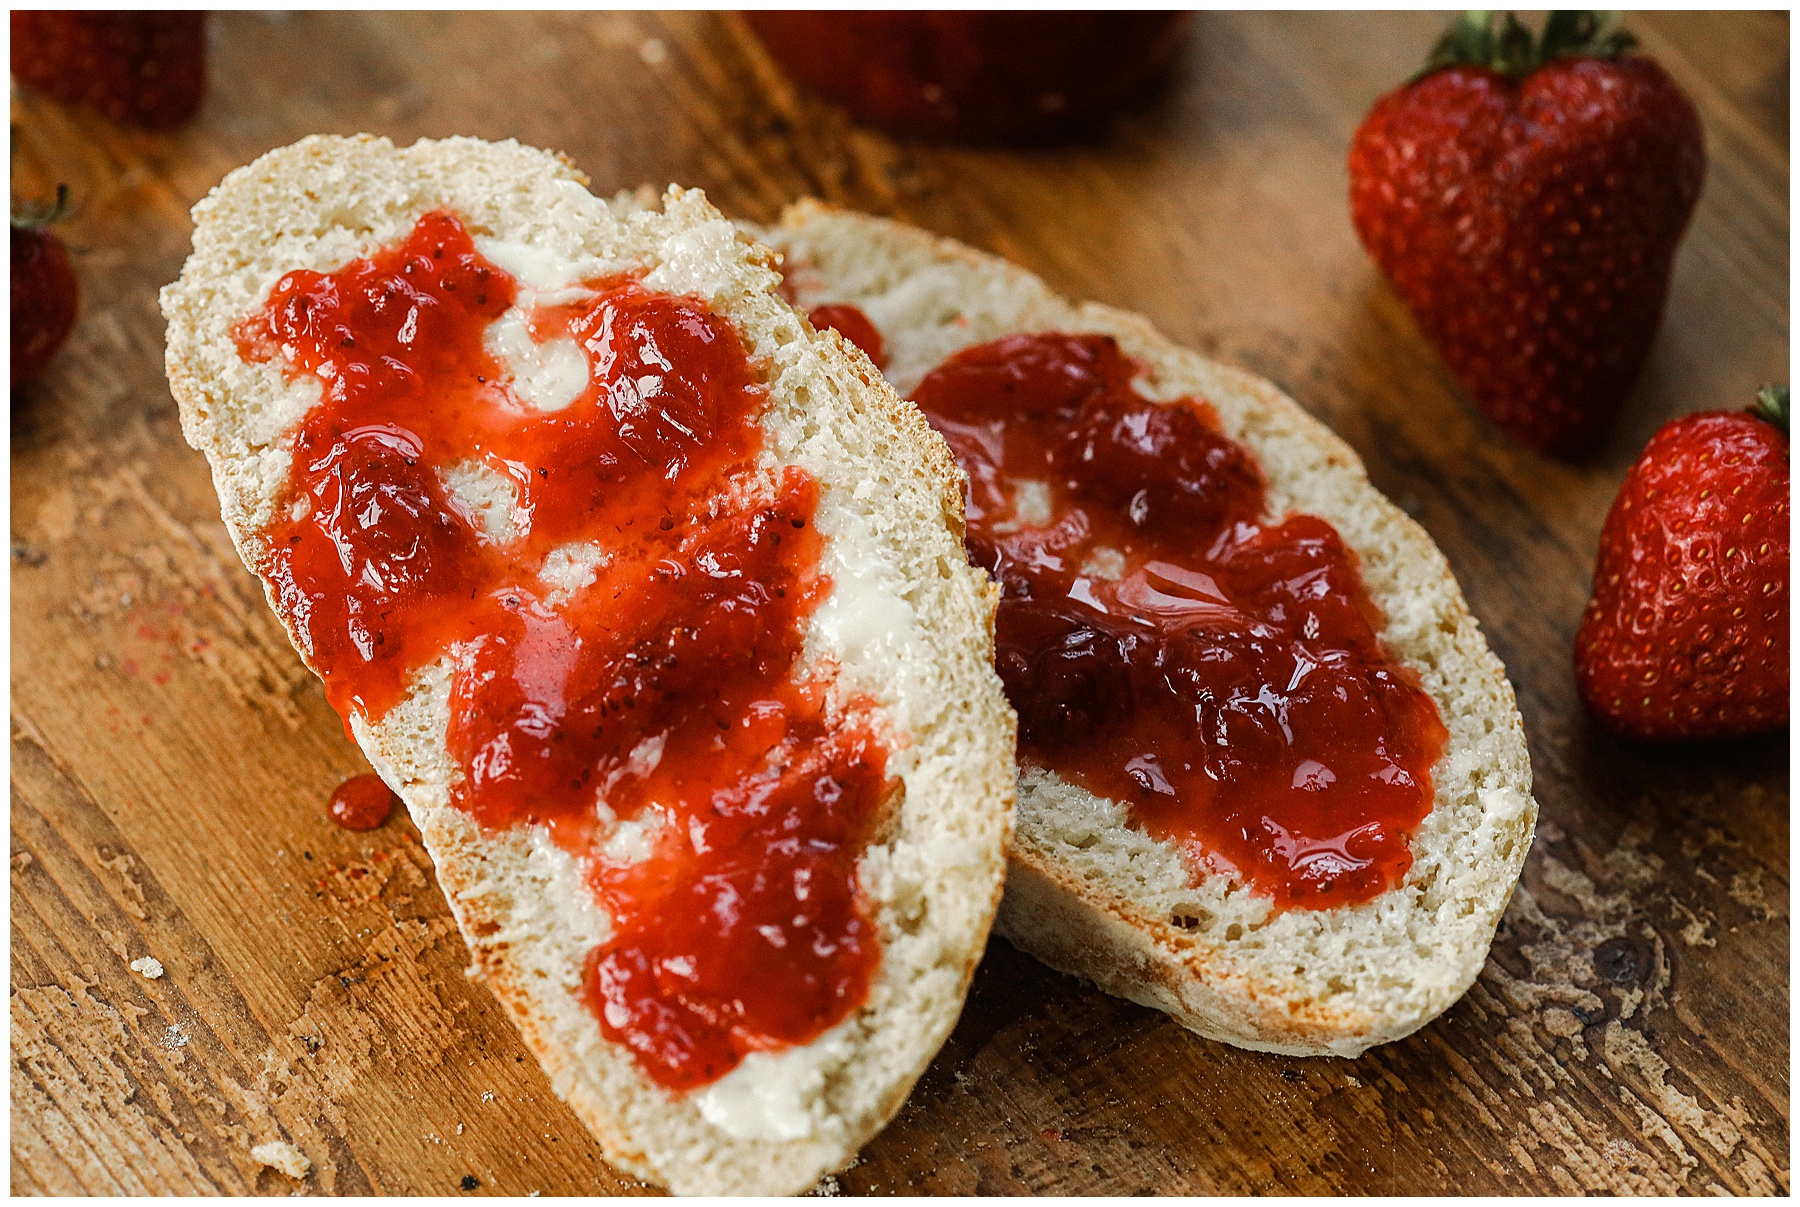 Homemade bread with homemade strawberry jam